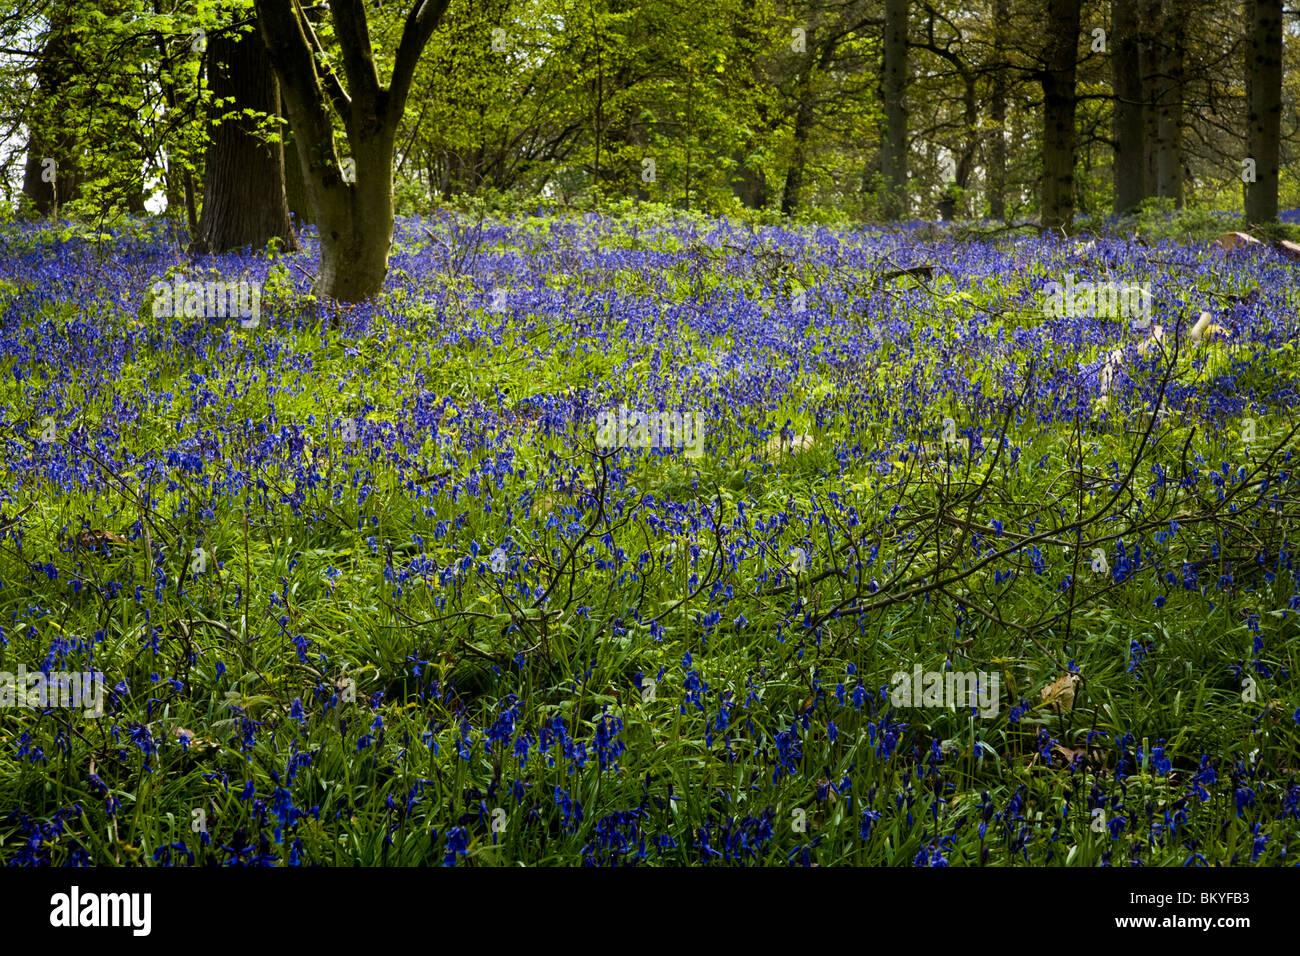 Bluebells during spring at Blickling Great Wood, Norfolk, UK. Stock Photo